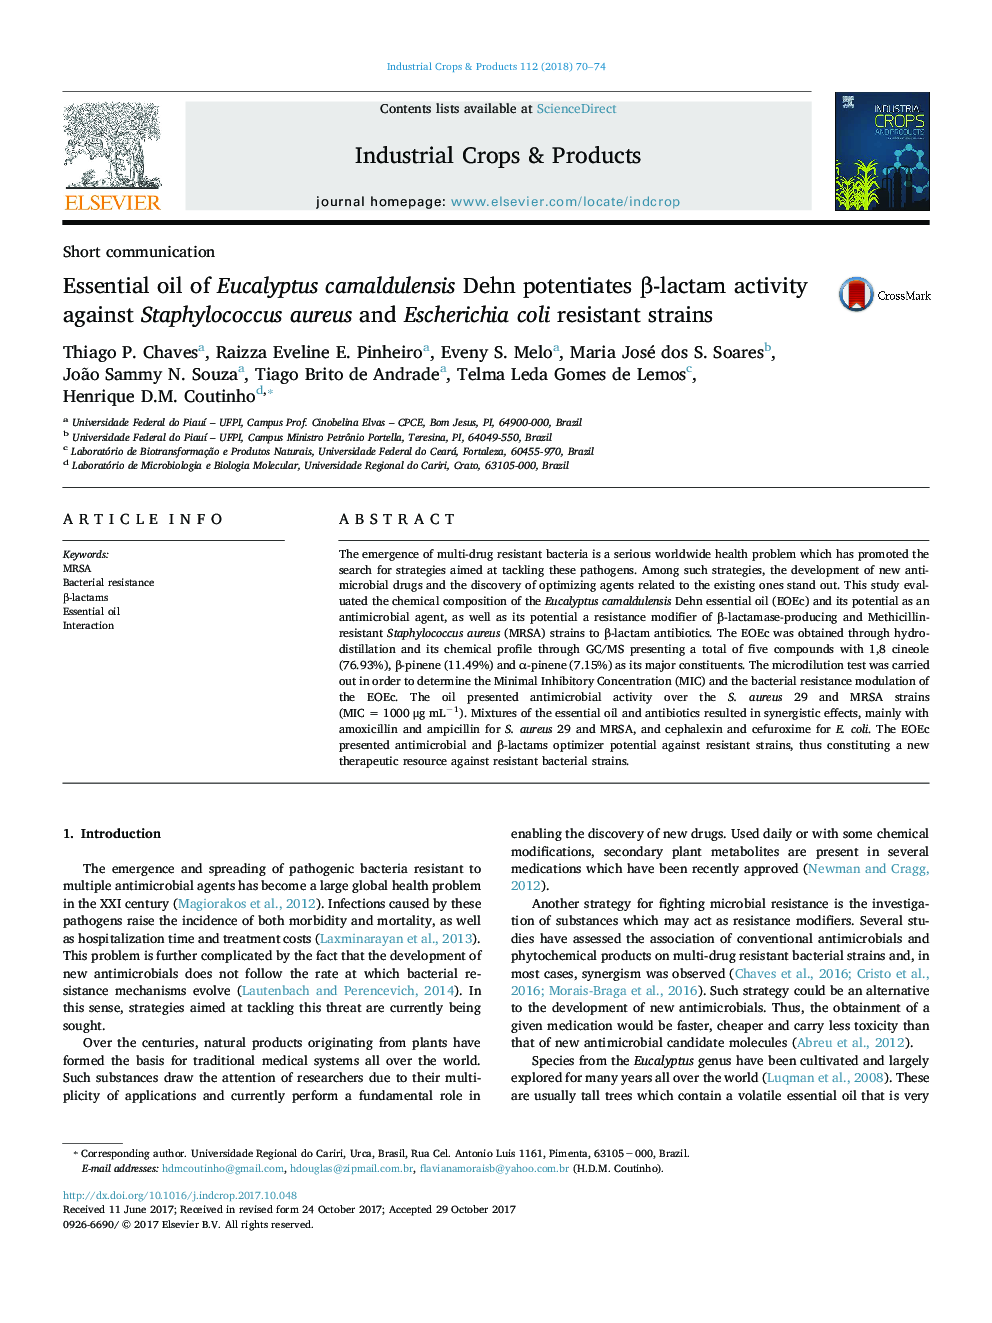 Essential oil of Eucalyptus camaldulensis Dehn potentiates Î²-lactam activity against Staphylococcus aureus and Escherichia coli resistant strains